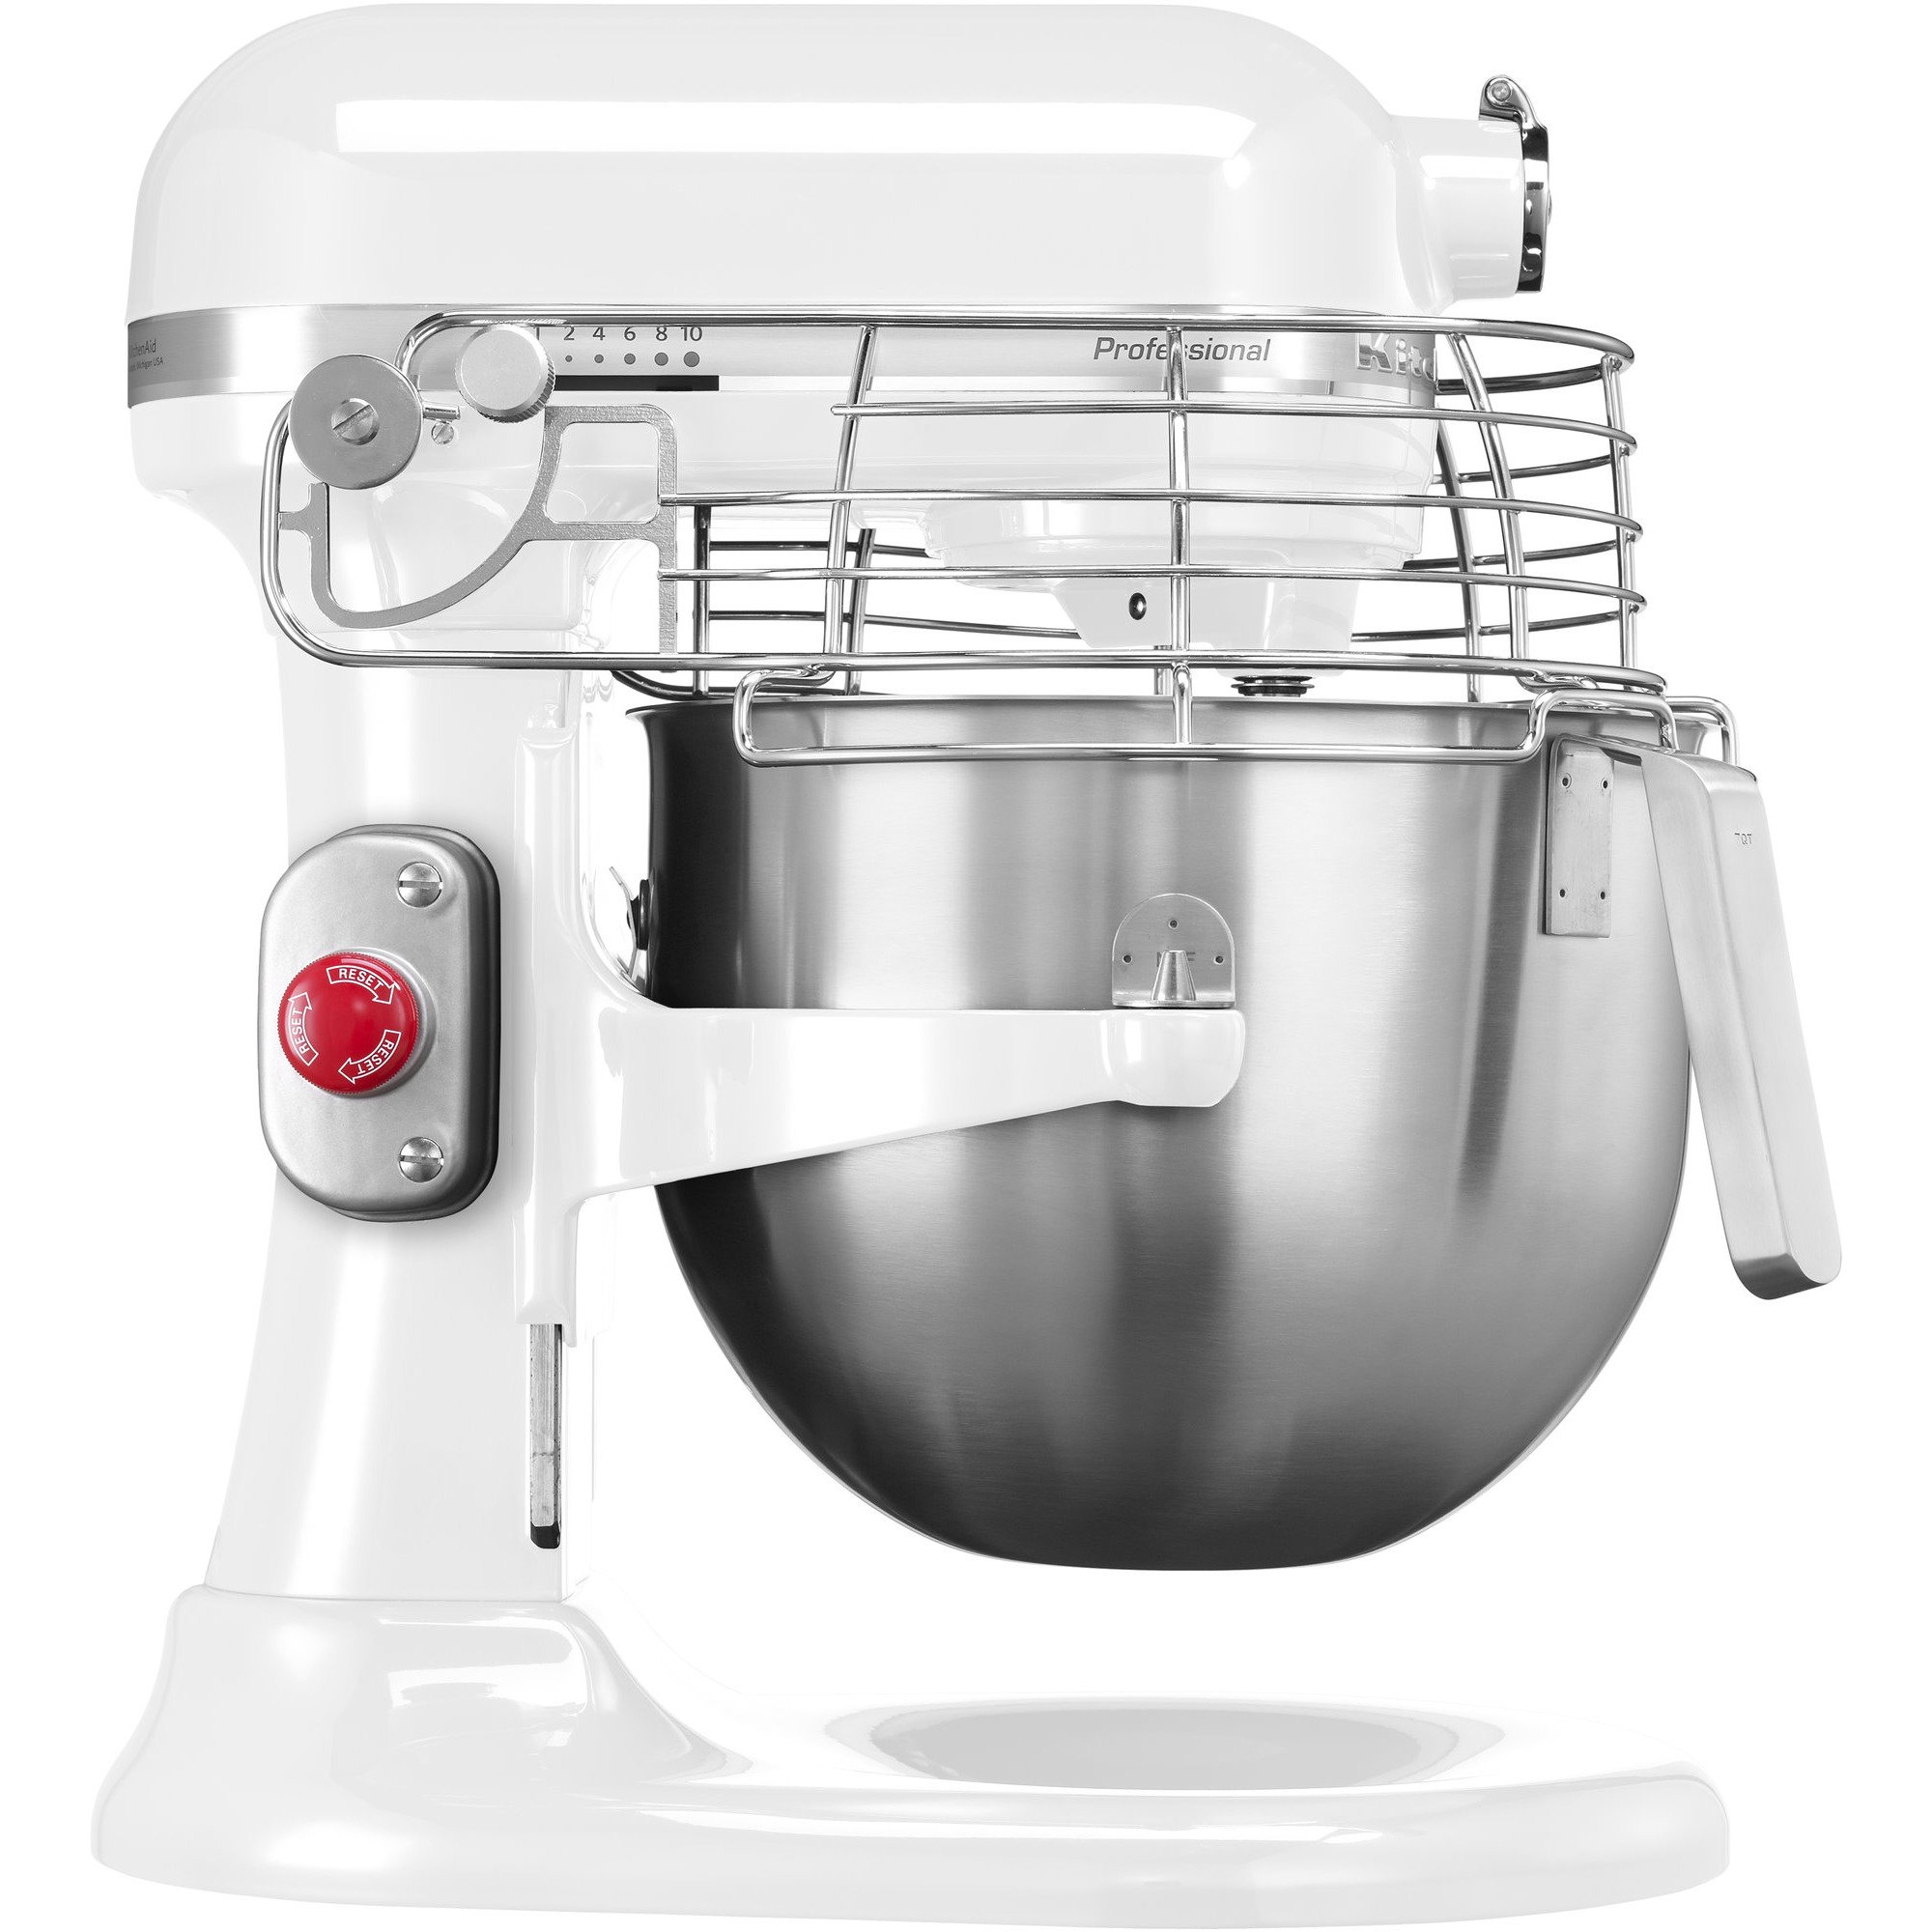 12: KitchenAid Professionel køkkenmaskine hvid